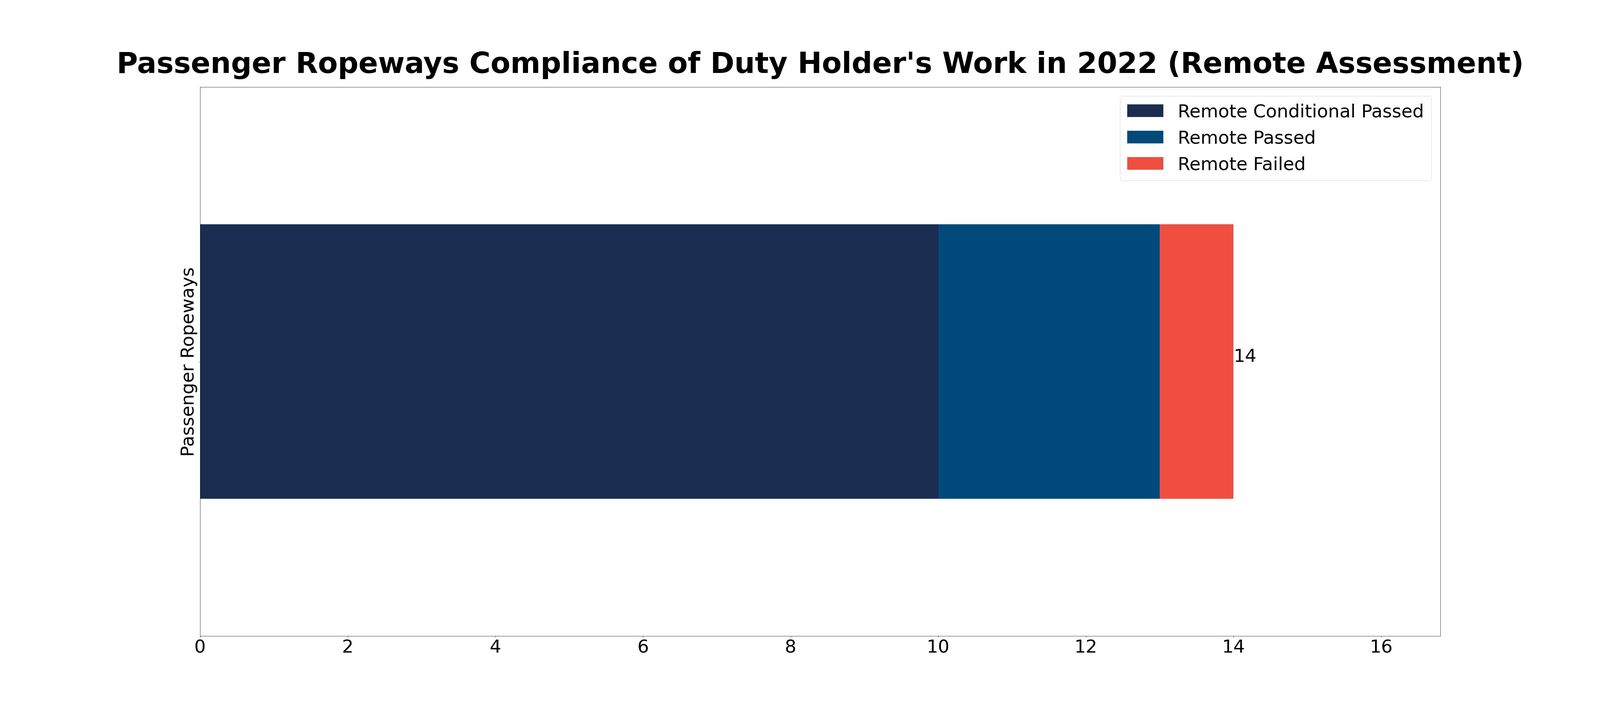 Passenger-Ropeways-Compliance-Duty-Holder-Work-2022-Remote-Assessment.jpg